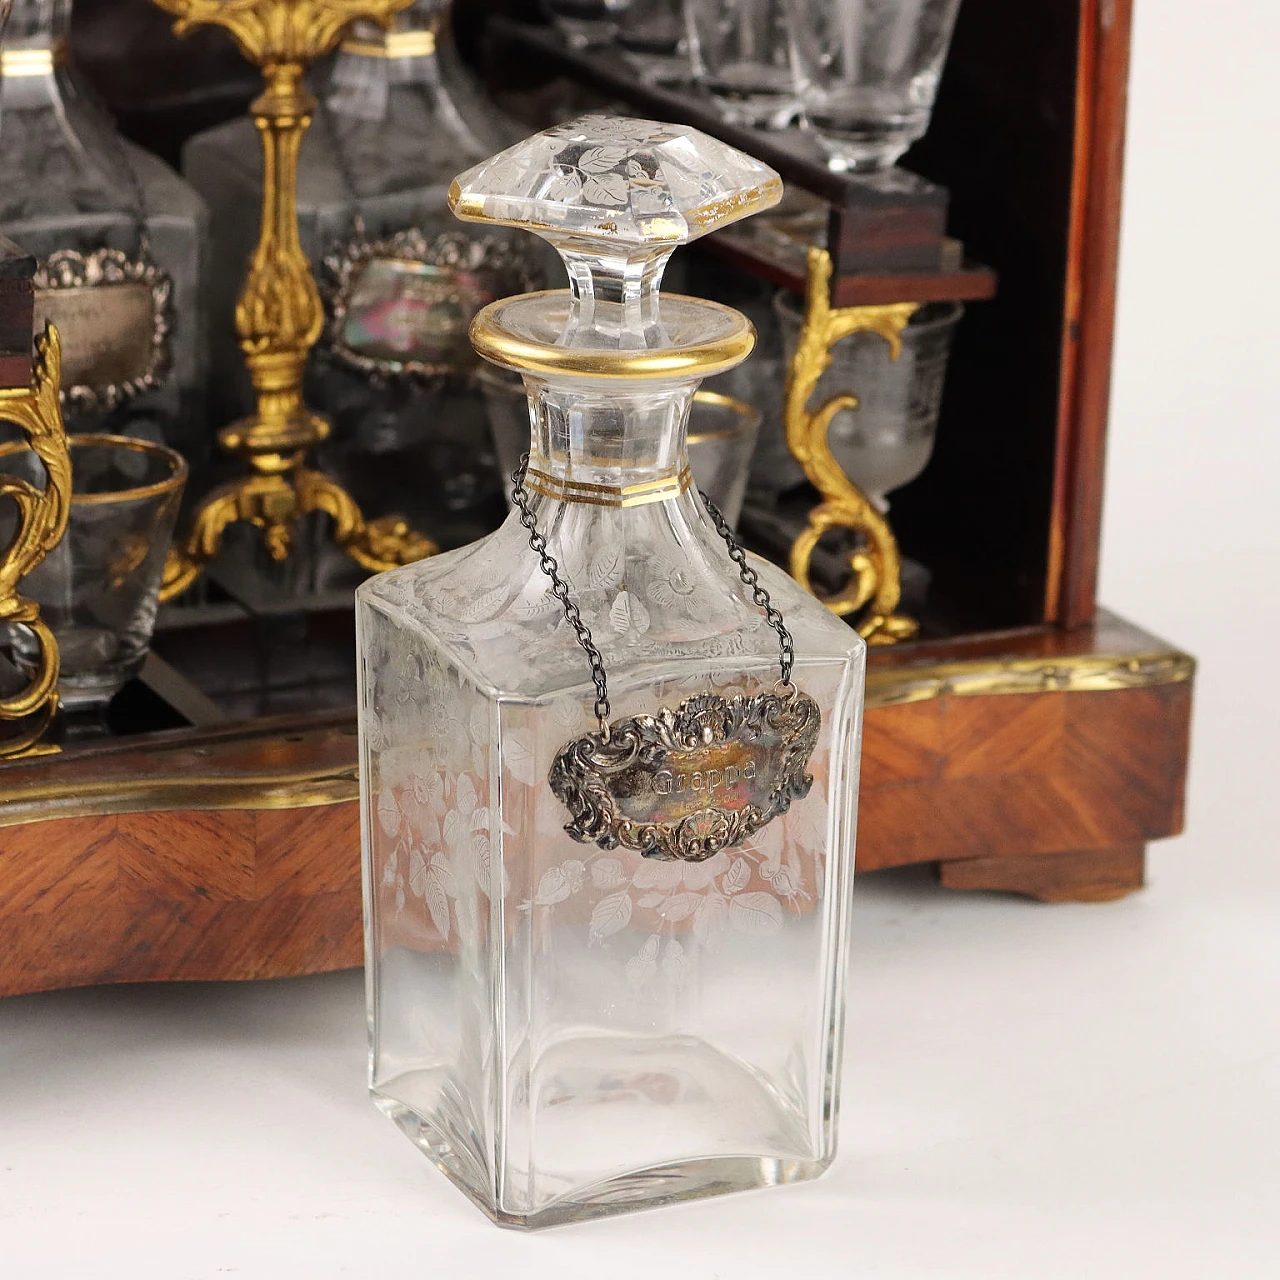 Bois de rose wooden liquor box with glasses & bottles, 19th century 3